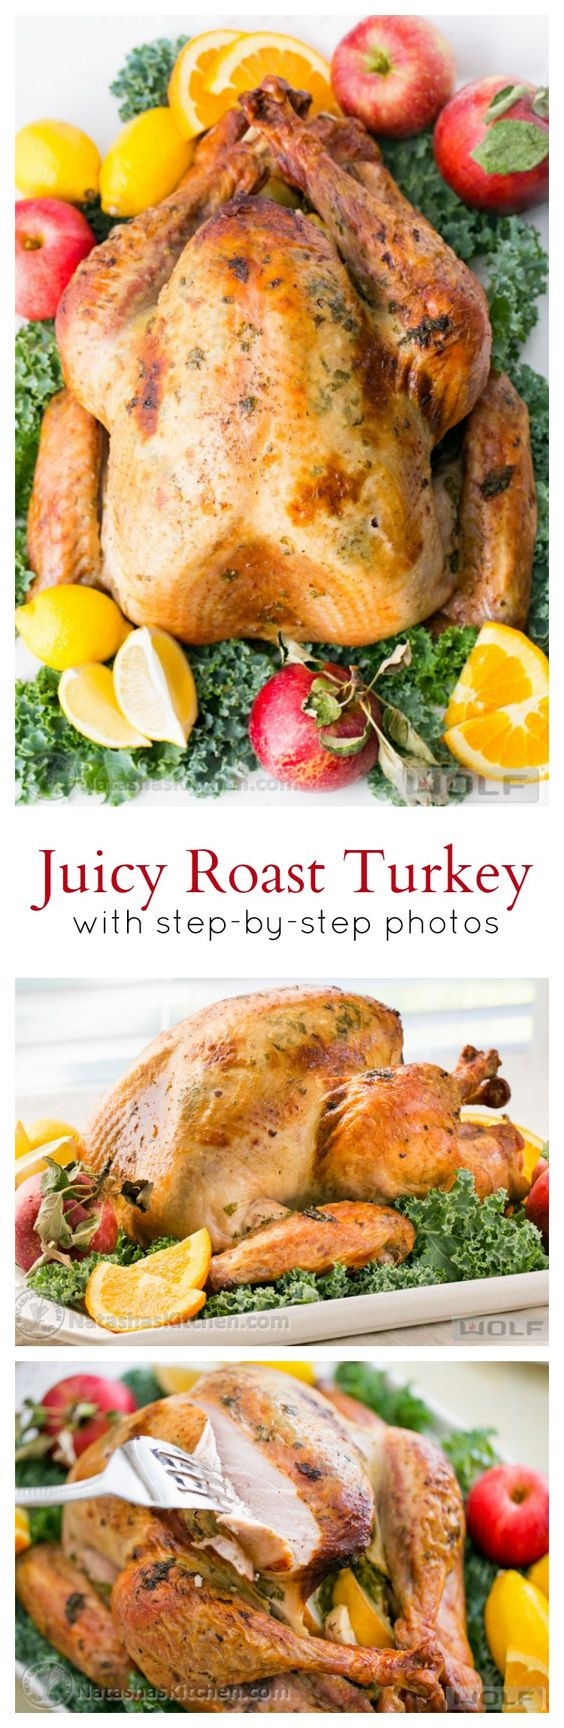 Classic Turkey Recipes Thanksgiving
 The BEST Thanksgiving Dinner Holiday Favorite Menu Recipes